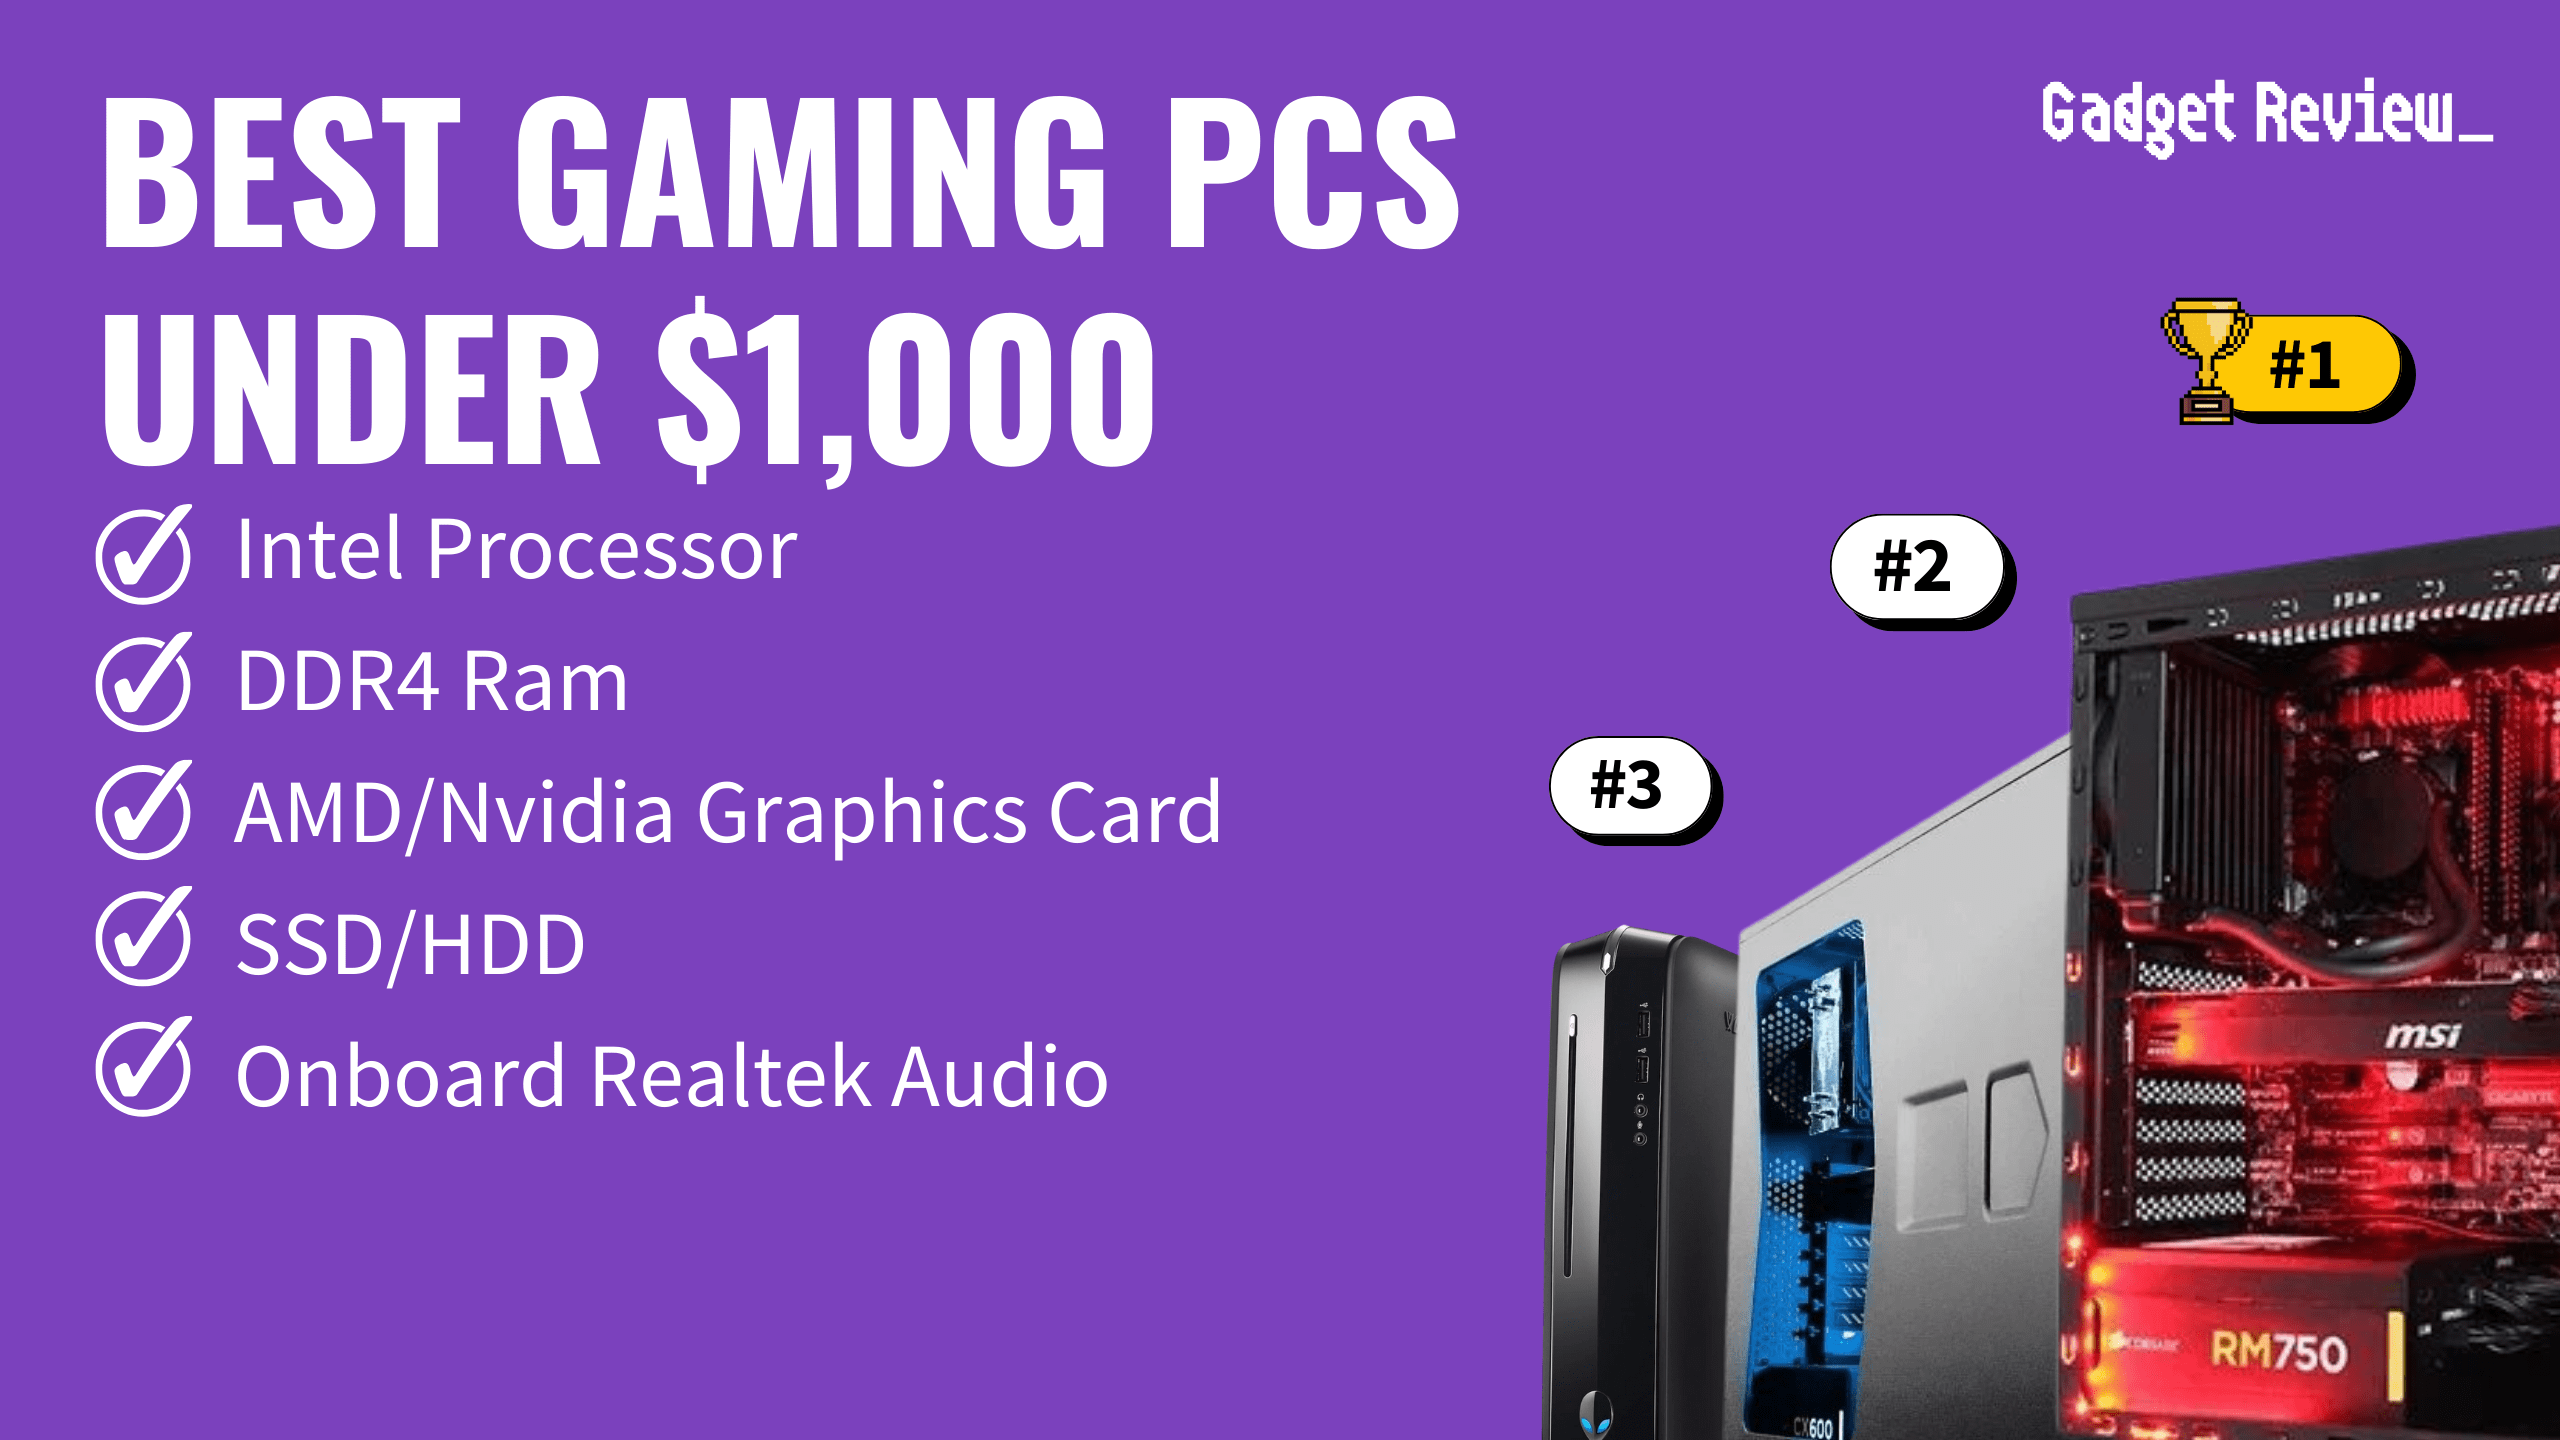 Best Gaming PCs Under $1,000